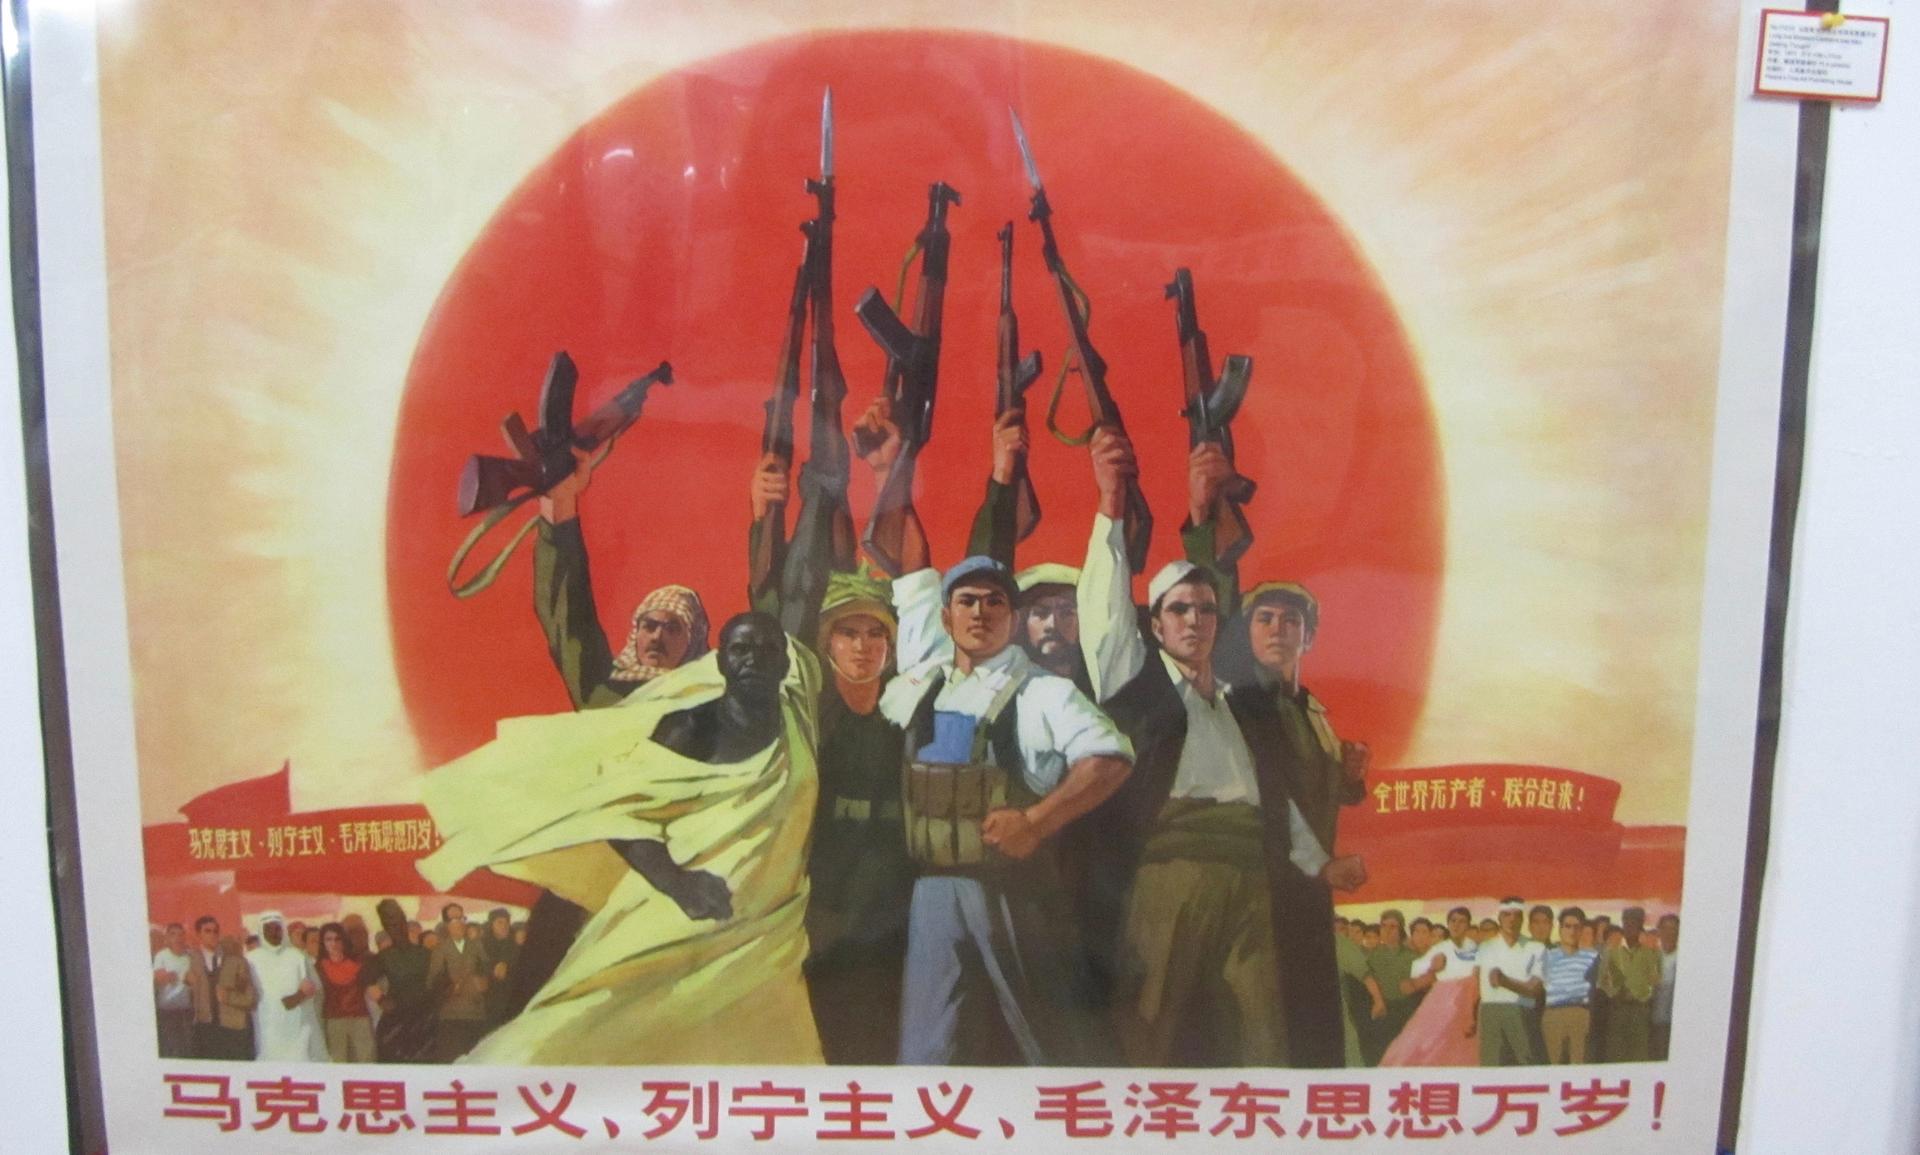 Poster from Shanghai's Propaganda Museum.